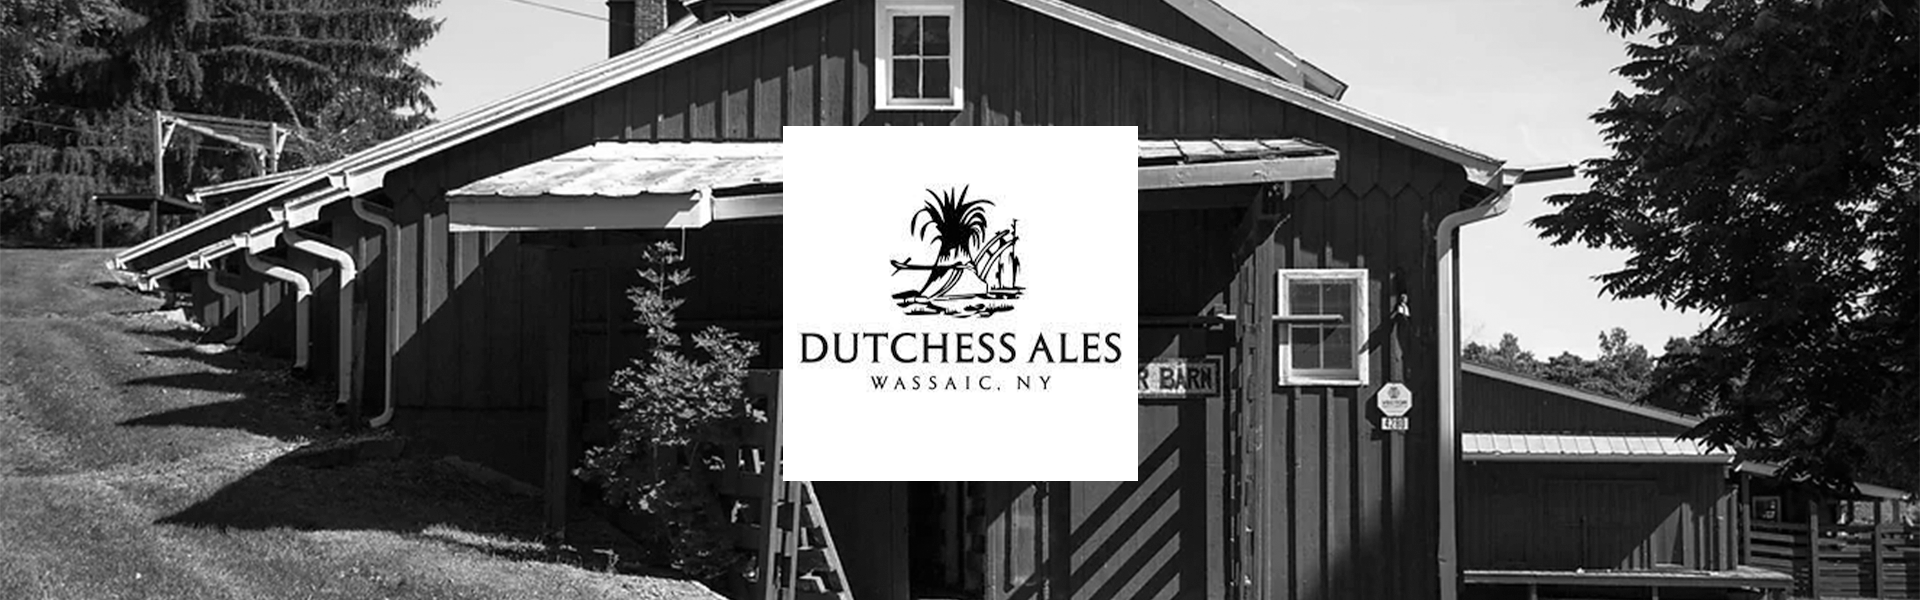 Dutchess Ales